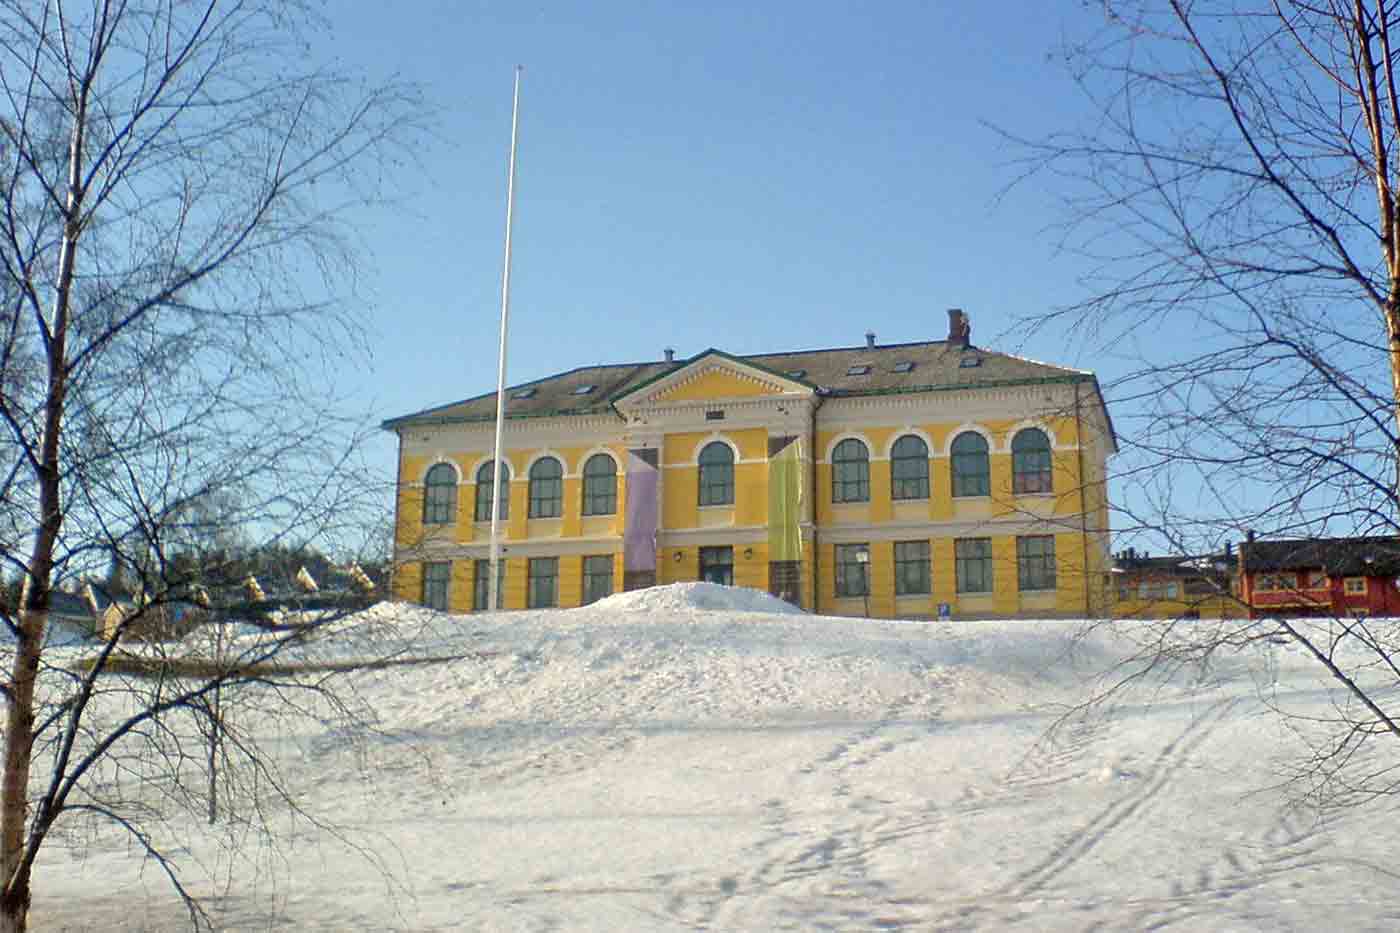 Tromsø Center for Contemporary Art